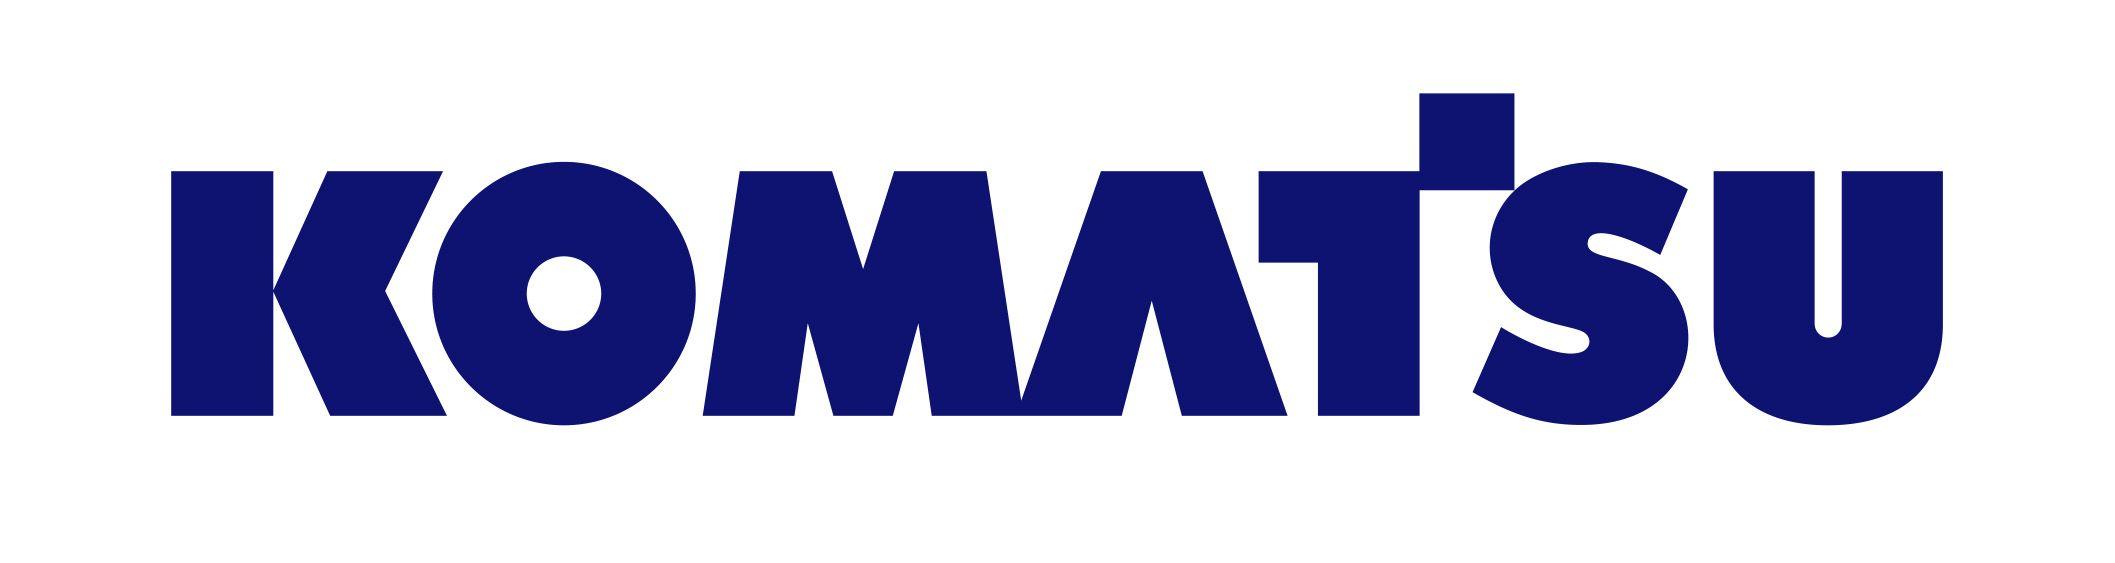 Komatsu Logo - Komatsu Logo Photo. About of logos